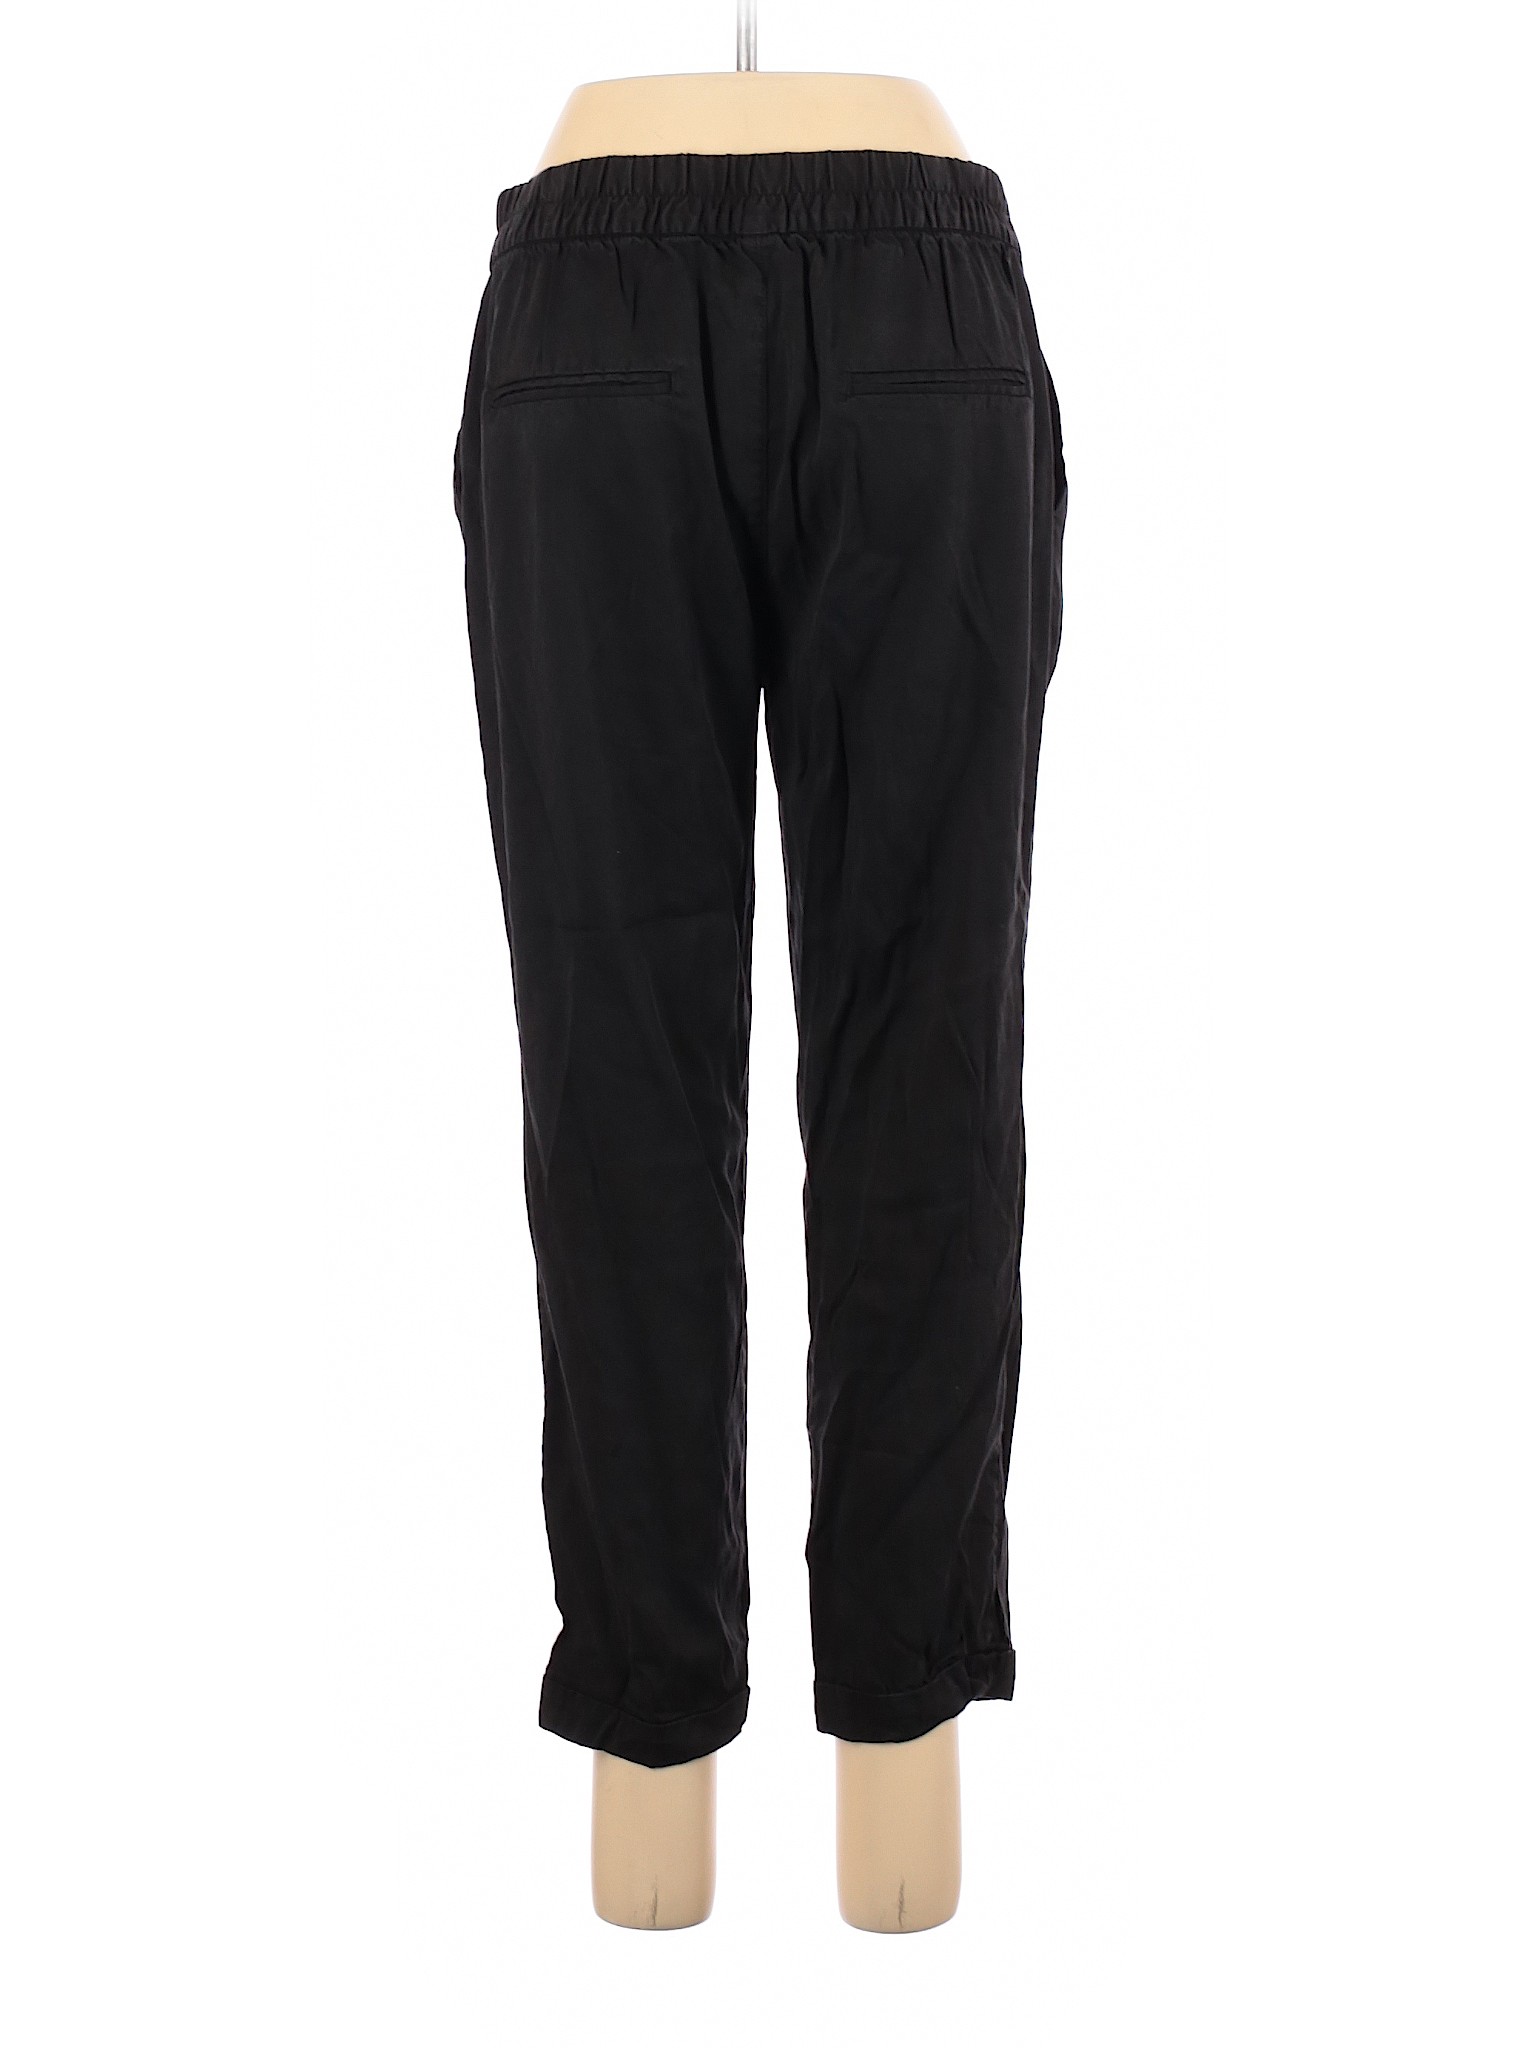 Old Navy Women Black Casual Pants 10 | eBay